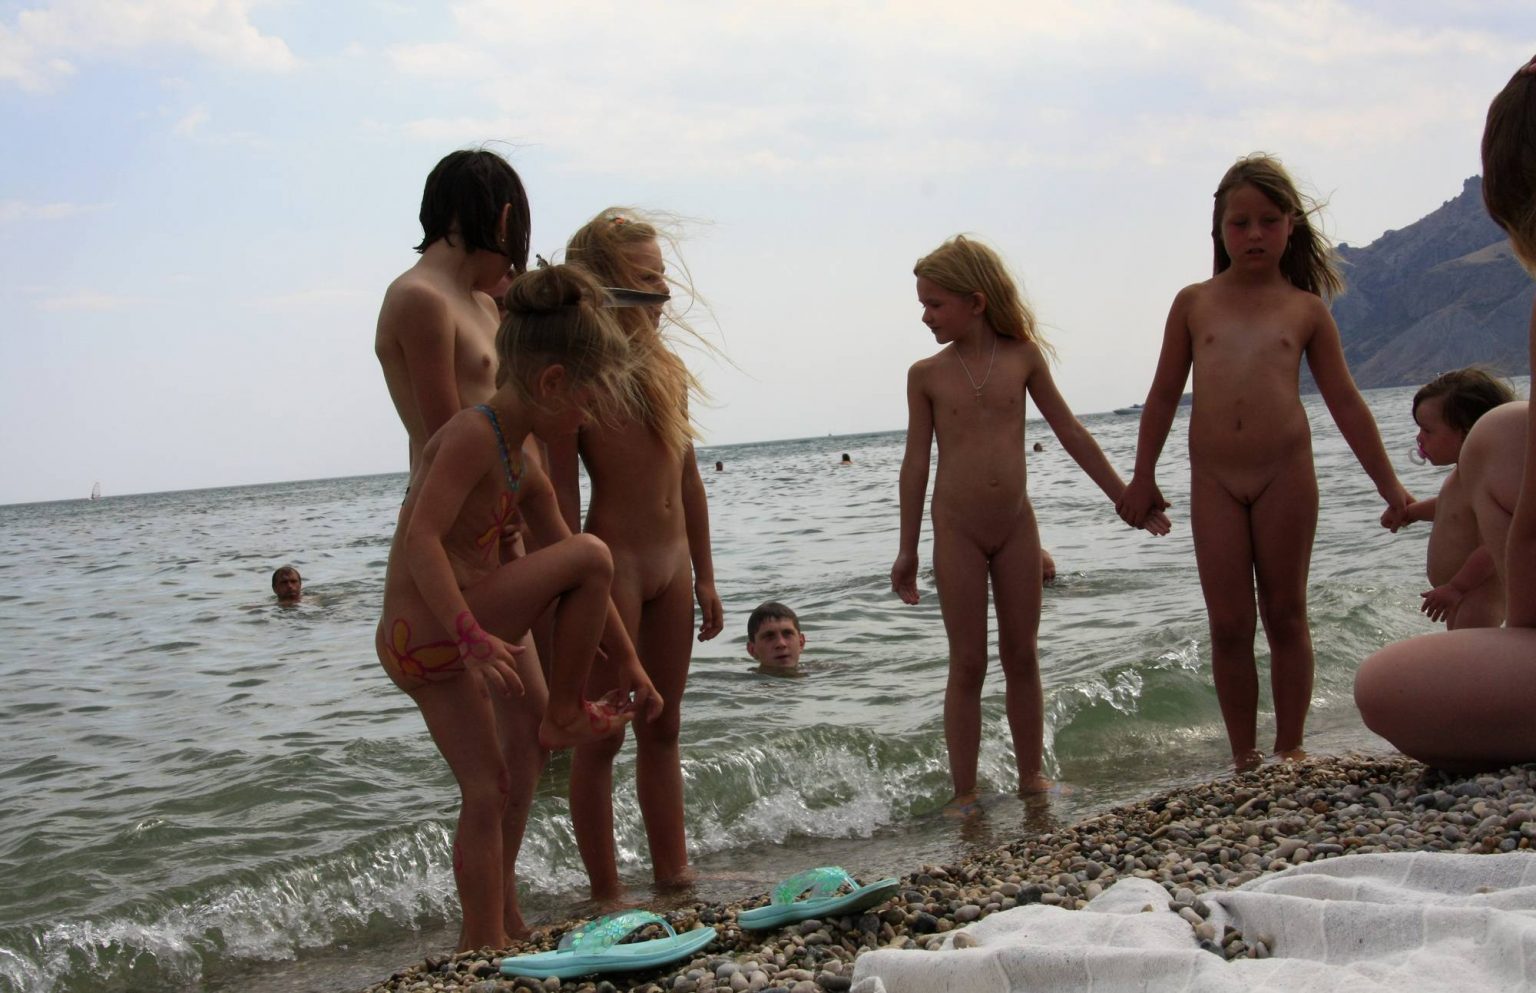 Ukrainian Water Splashing Nudist Pictures Mb Nudist Base Xyz